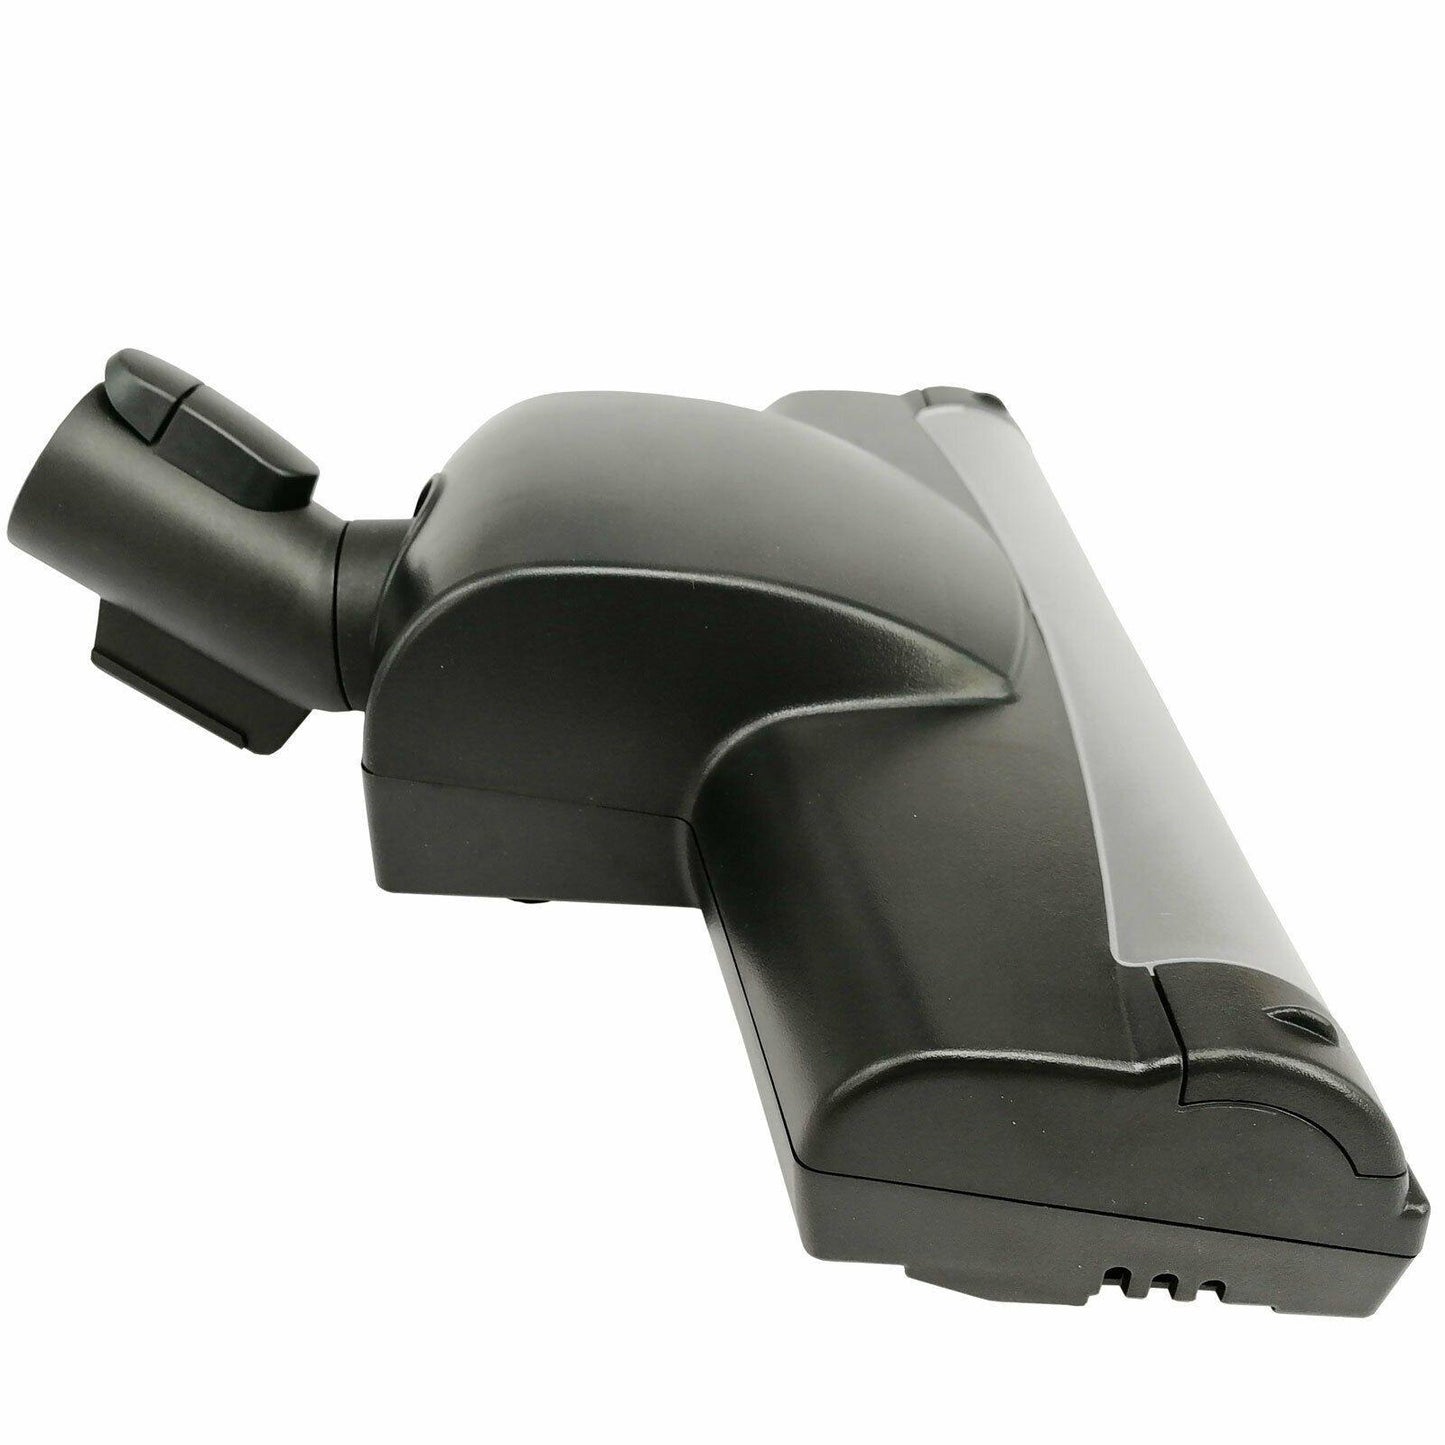 Interlock Turbo Floor Head Nozzle For Miele S6230 S6240 S6250 S6260 S6270 S6280 Sparesbarn